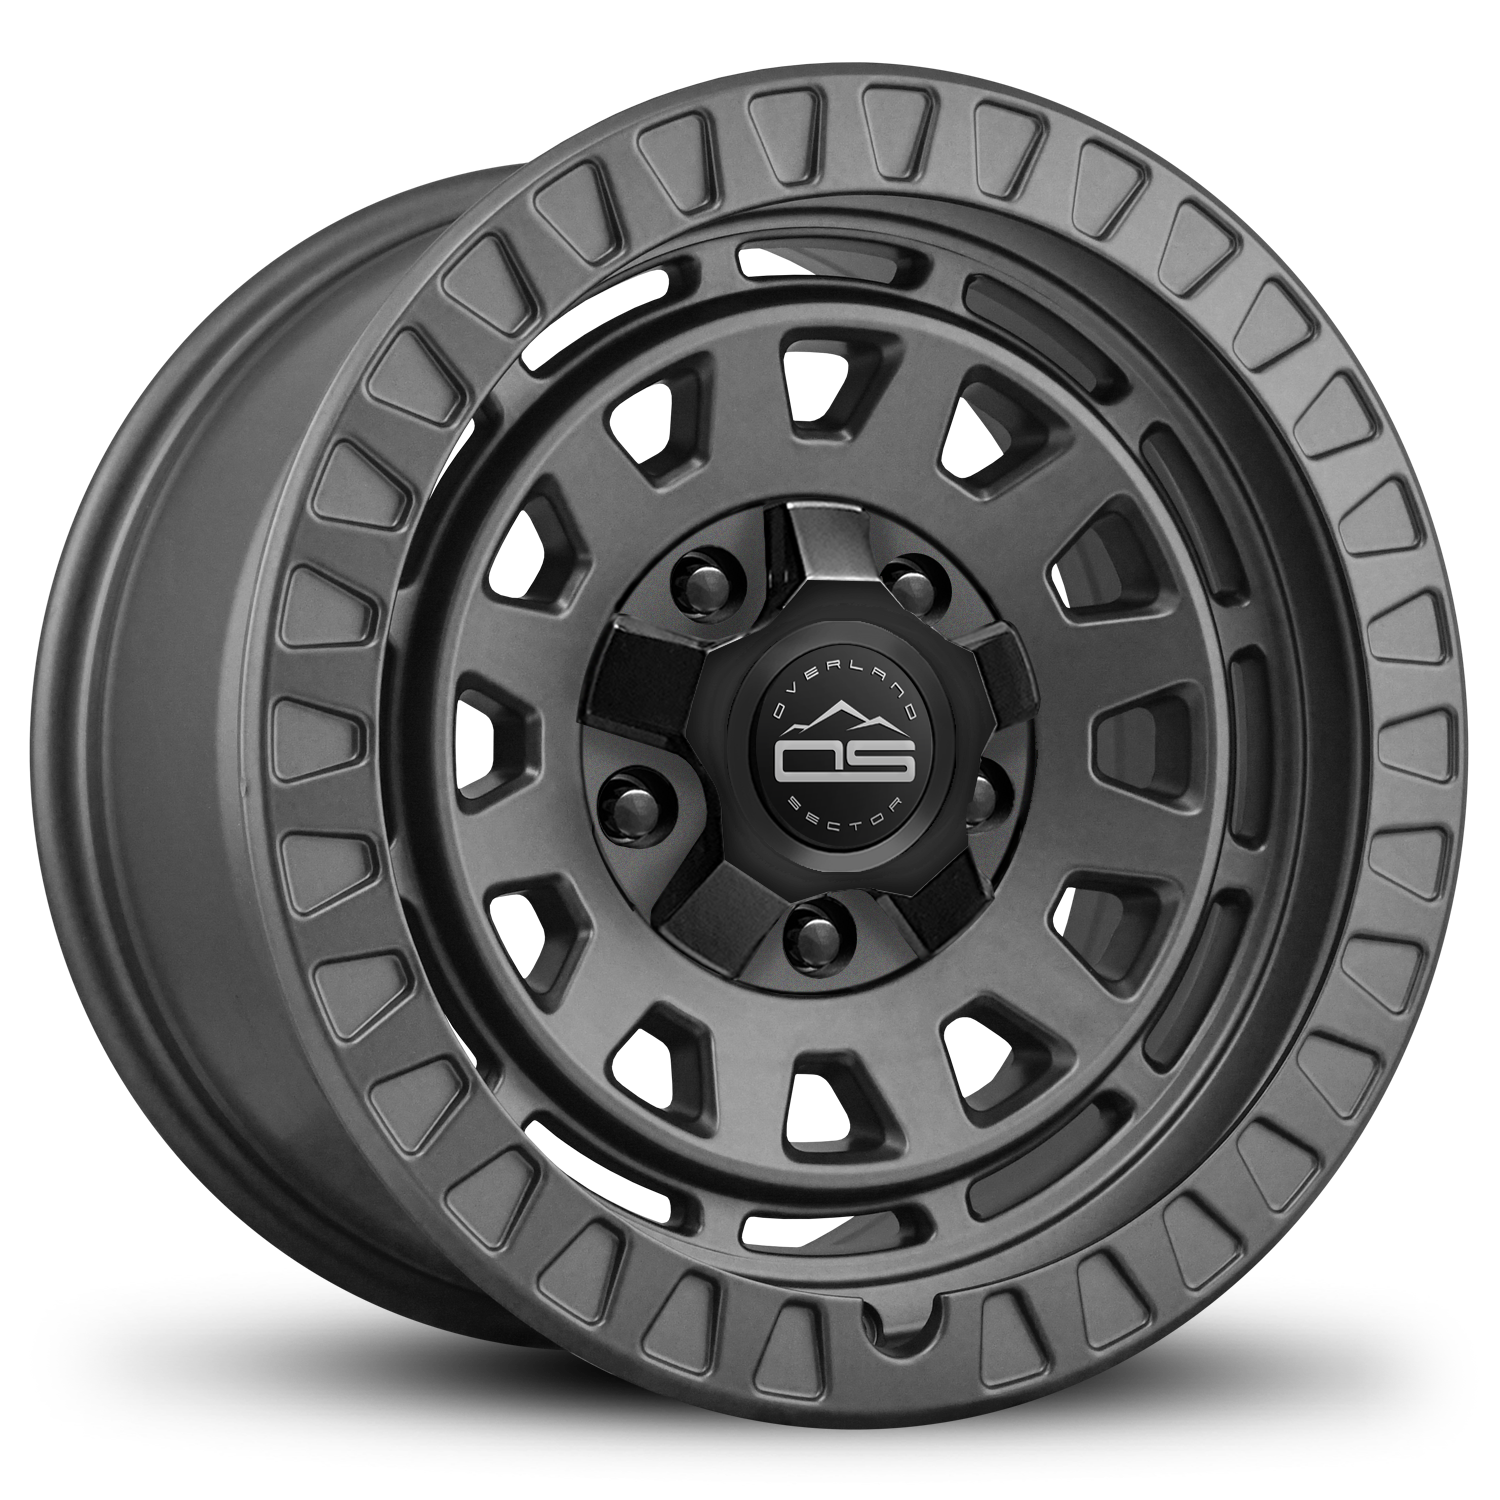 HD Off-Road Overland Sector Adventure Outdoor Life Style Wheel Rims for Acura MDX, RDX, Honda Passport, Ridgeline, Pilot, JEEP Wrangler, Gladiator in 17x9.0 Inch All Satin Gray 5x114.3 & 5x127